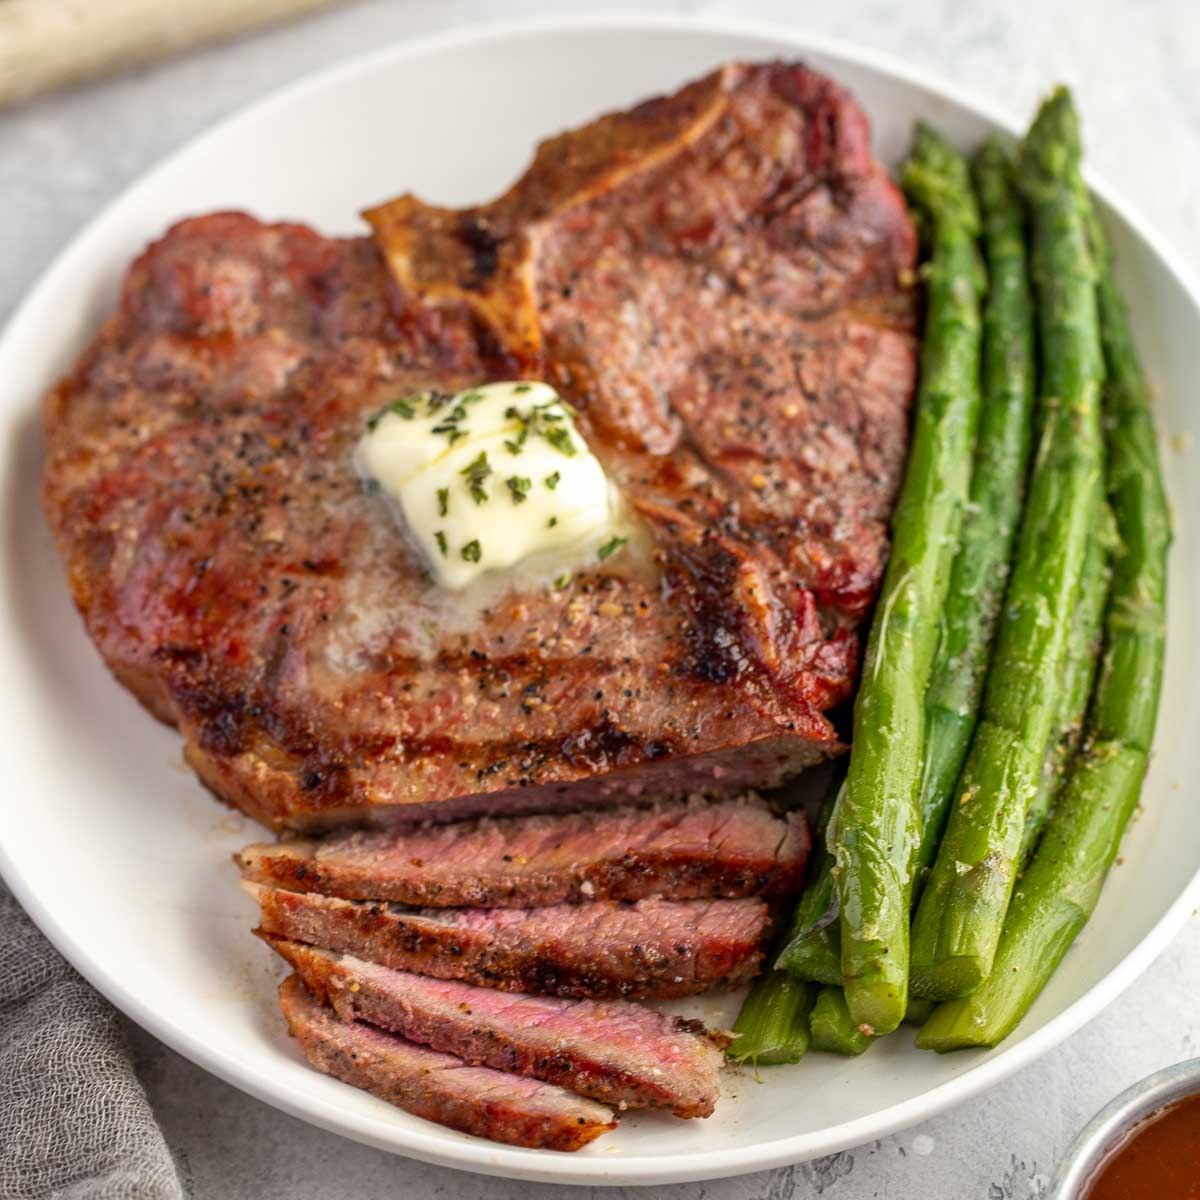 Ribeye steak with asparagus